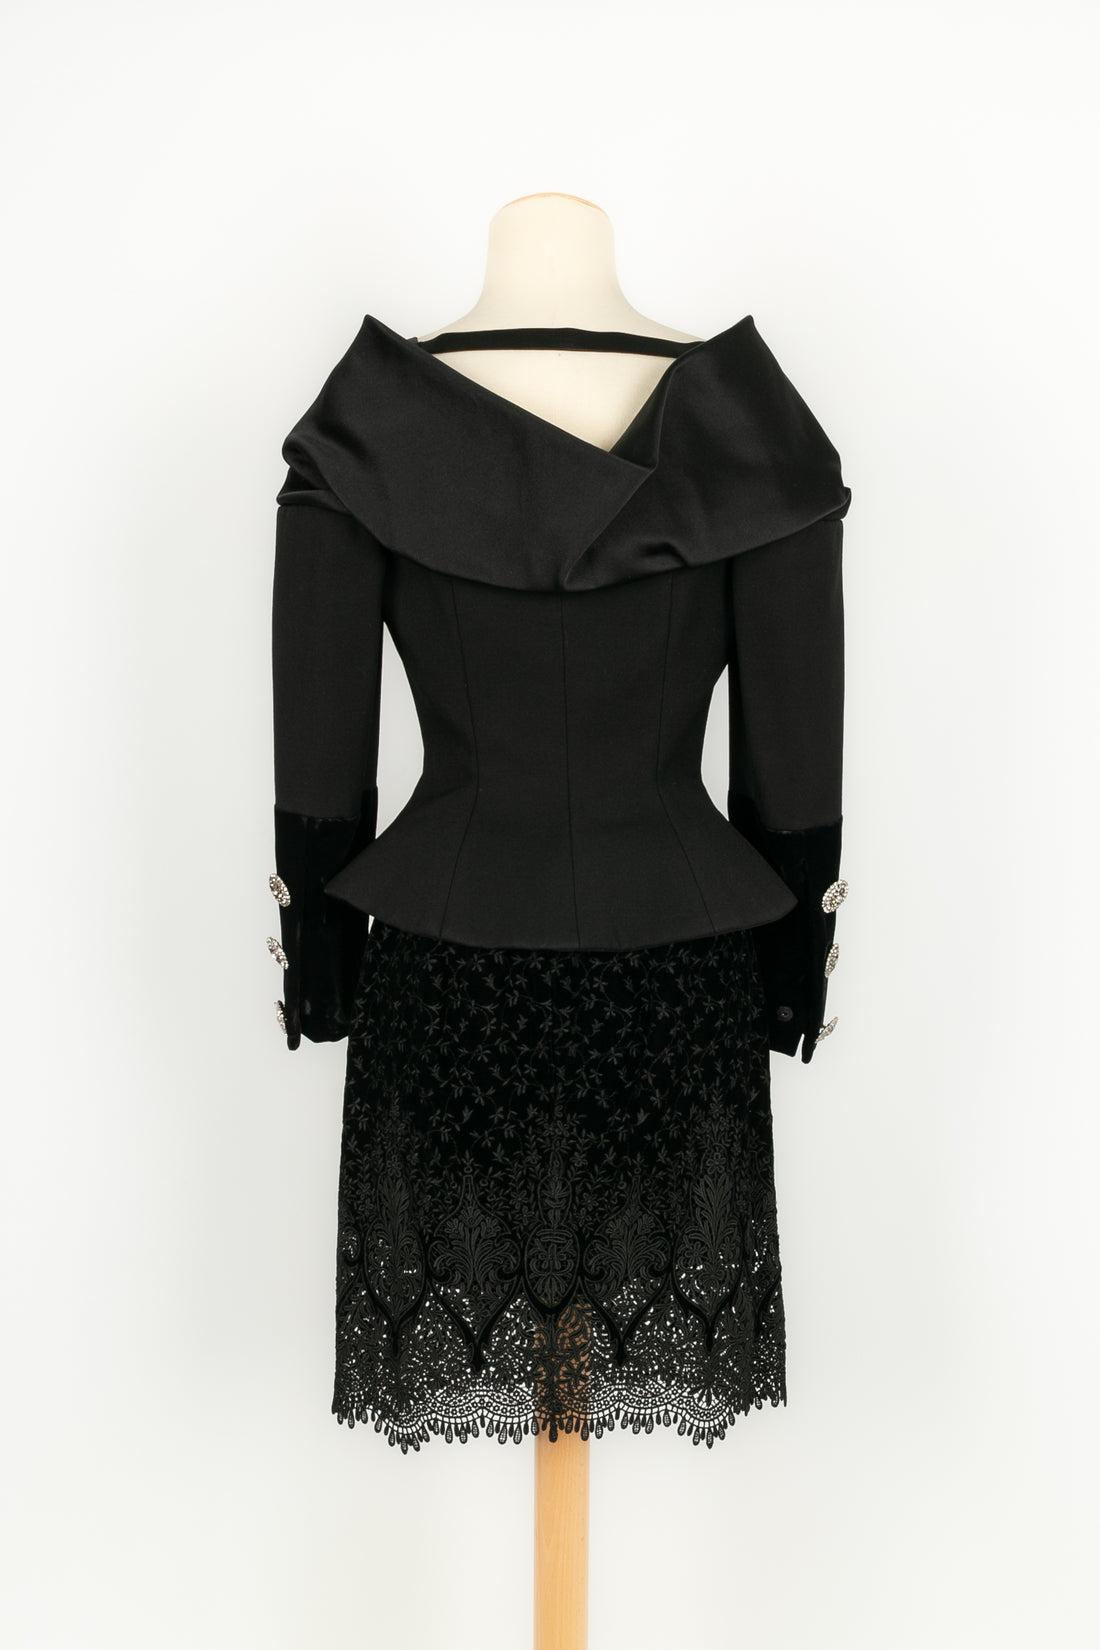 Women's Christian Lacroix Haute Couture Black Jacket and Skirt Set For Sale